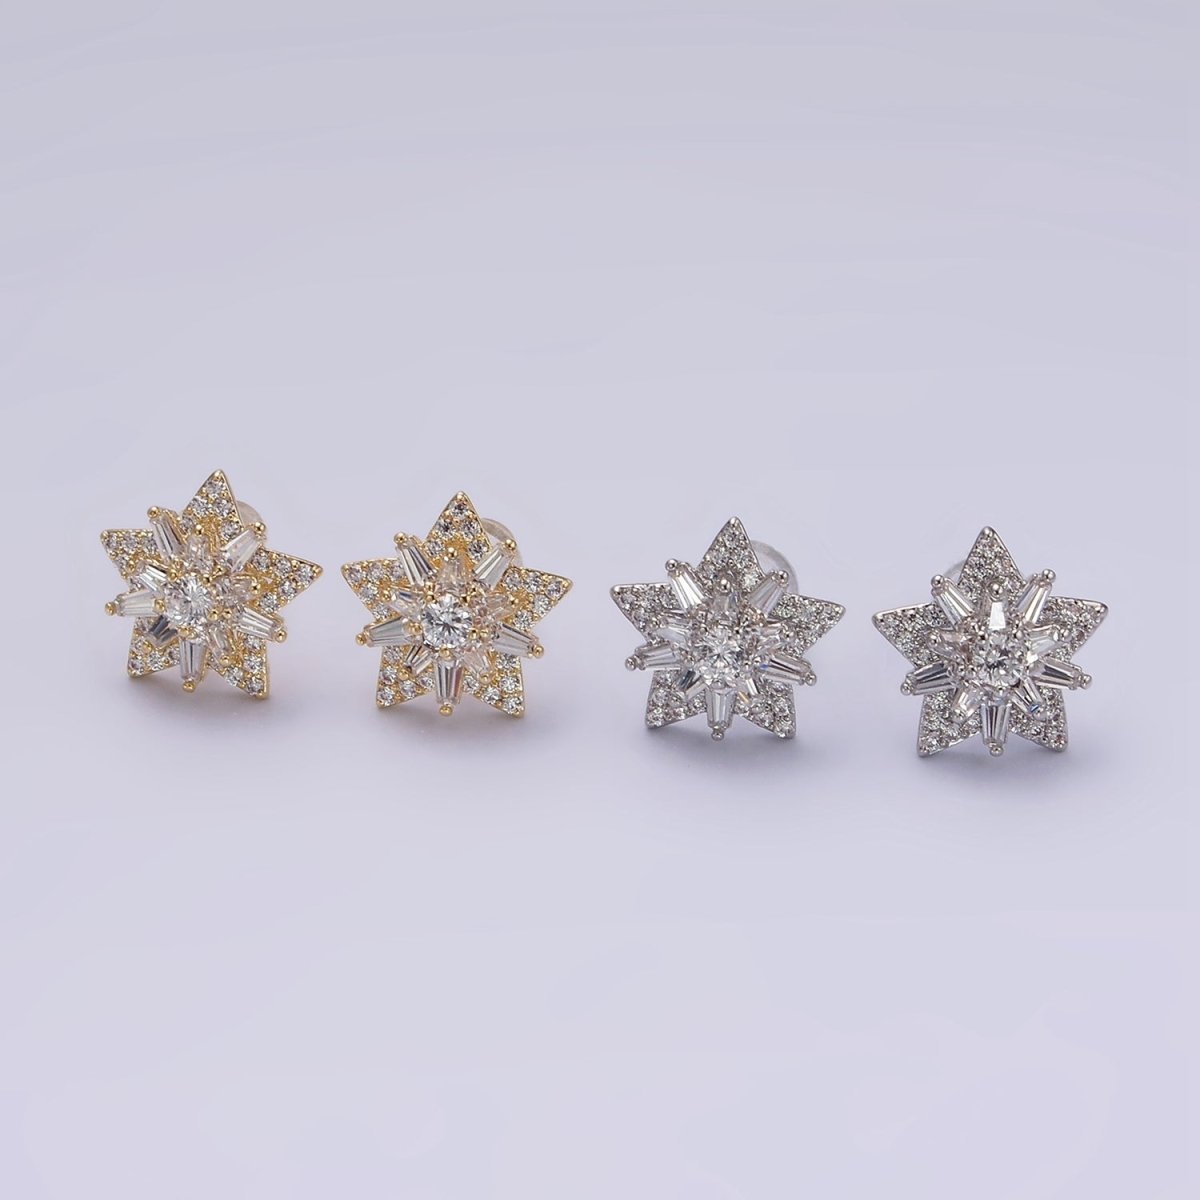 14K Gold Filled Celestial Star Baguette Micro Paved CZ Stud Earrings in Gold & Silver | V271 V272 - DLUXCA